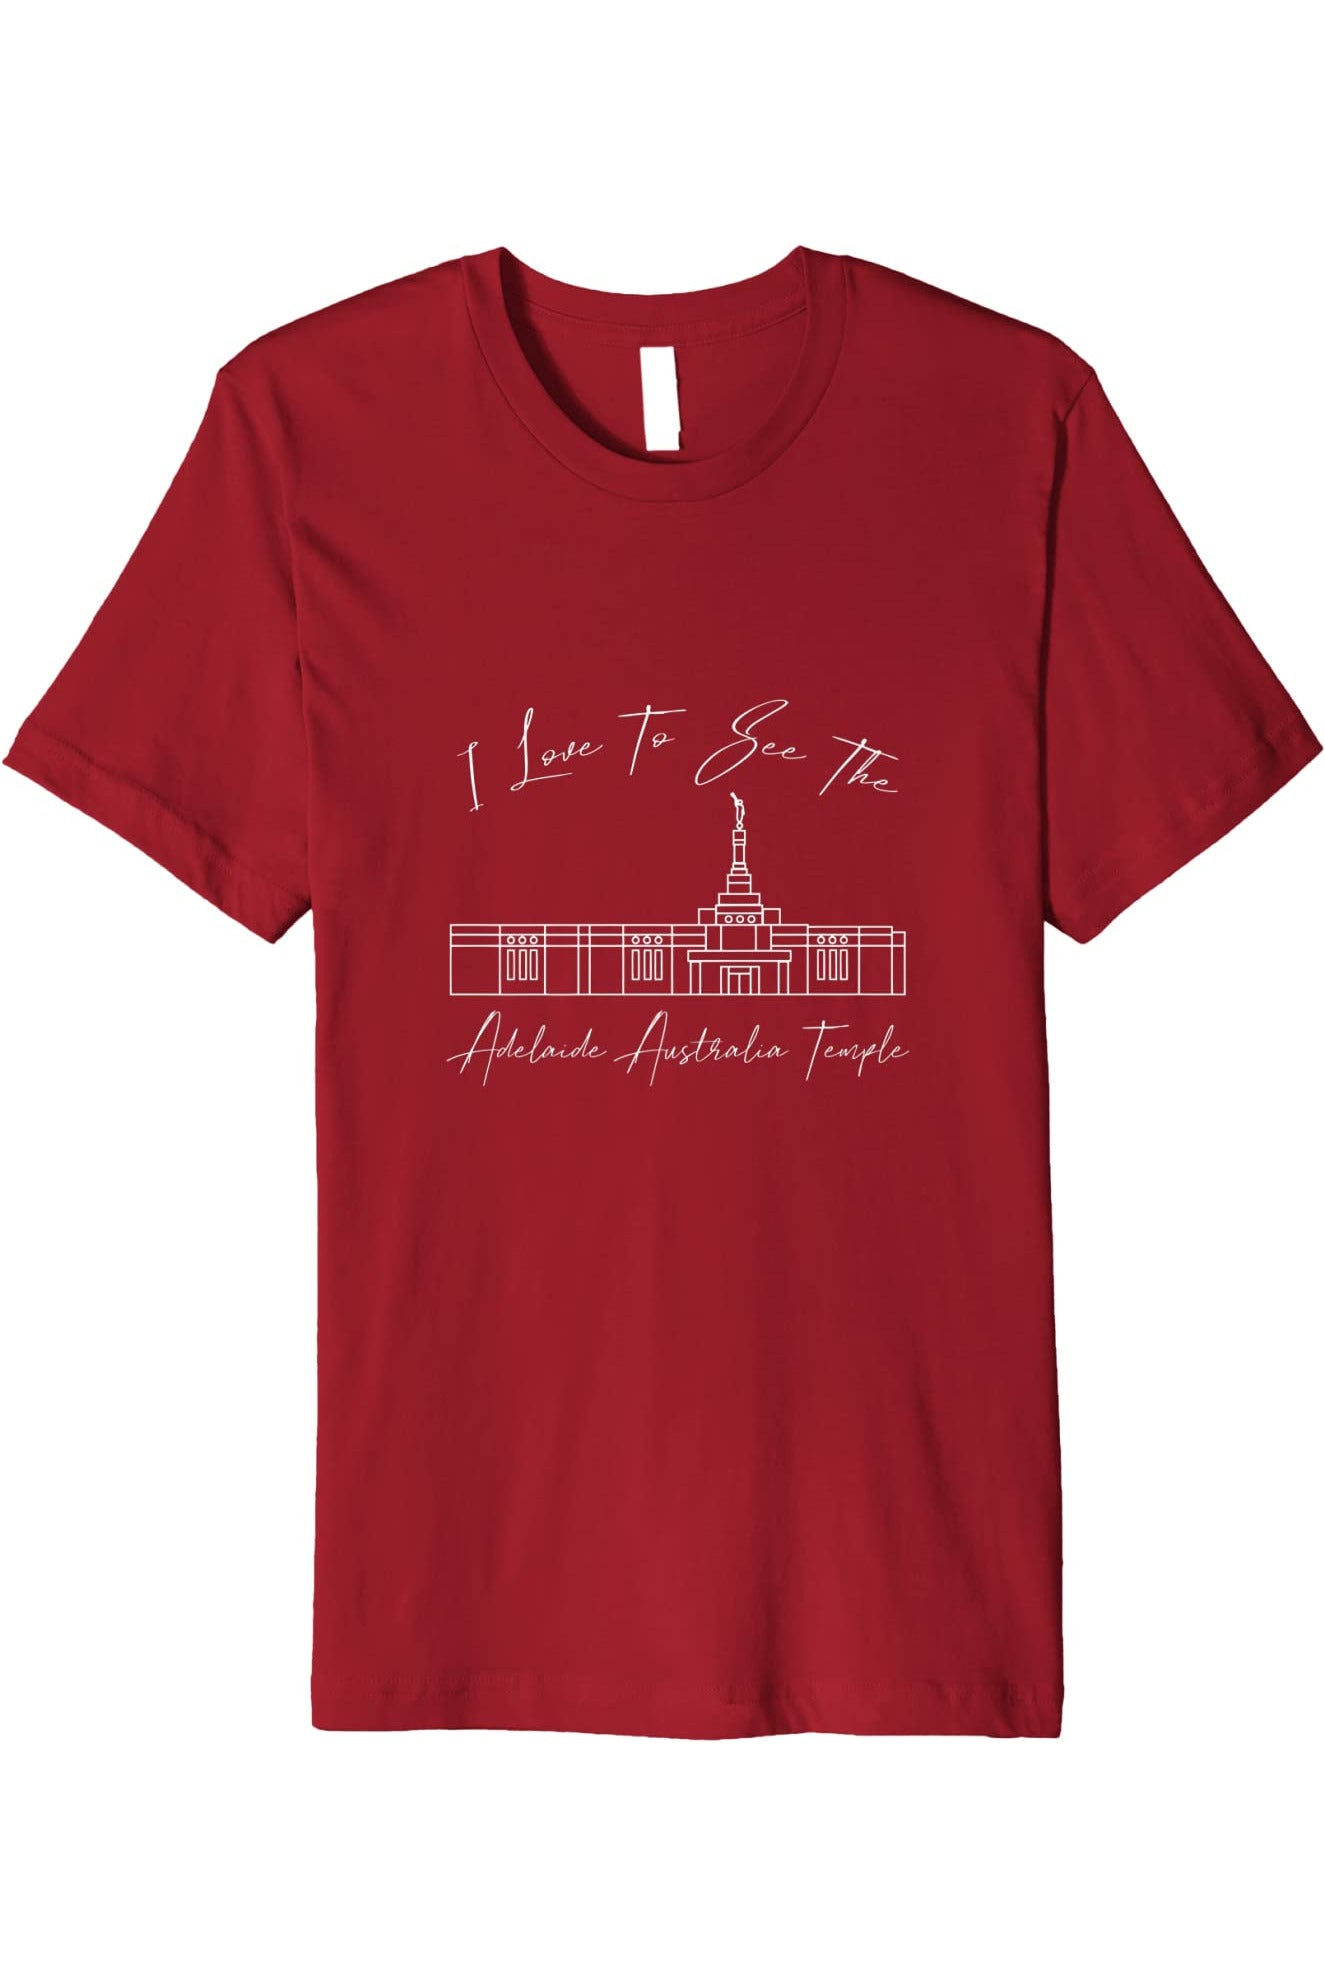 Adelaide Australia Temple T-Shirt - Premium - Calligraphy Style (English) US